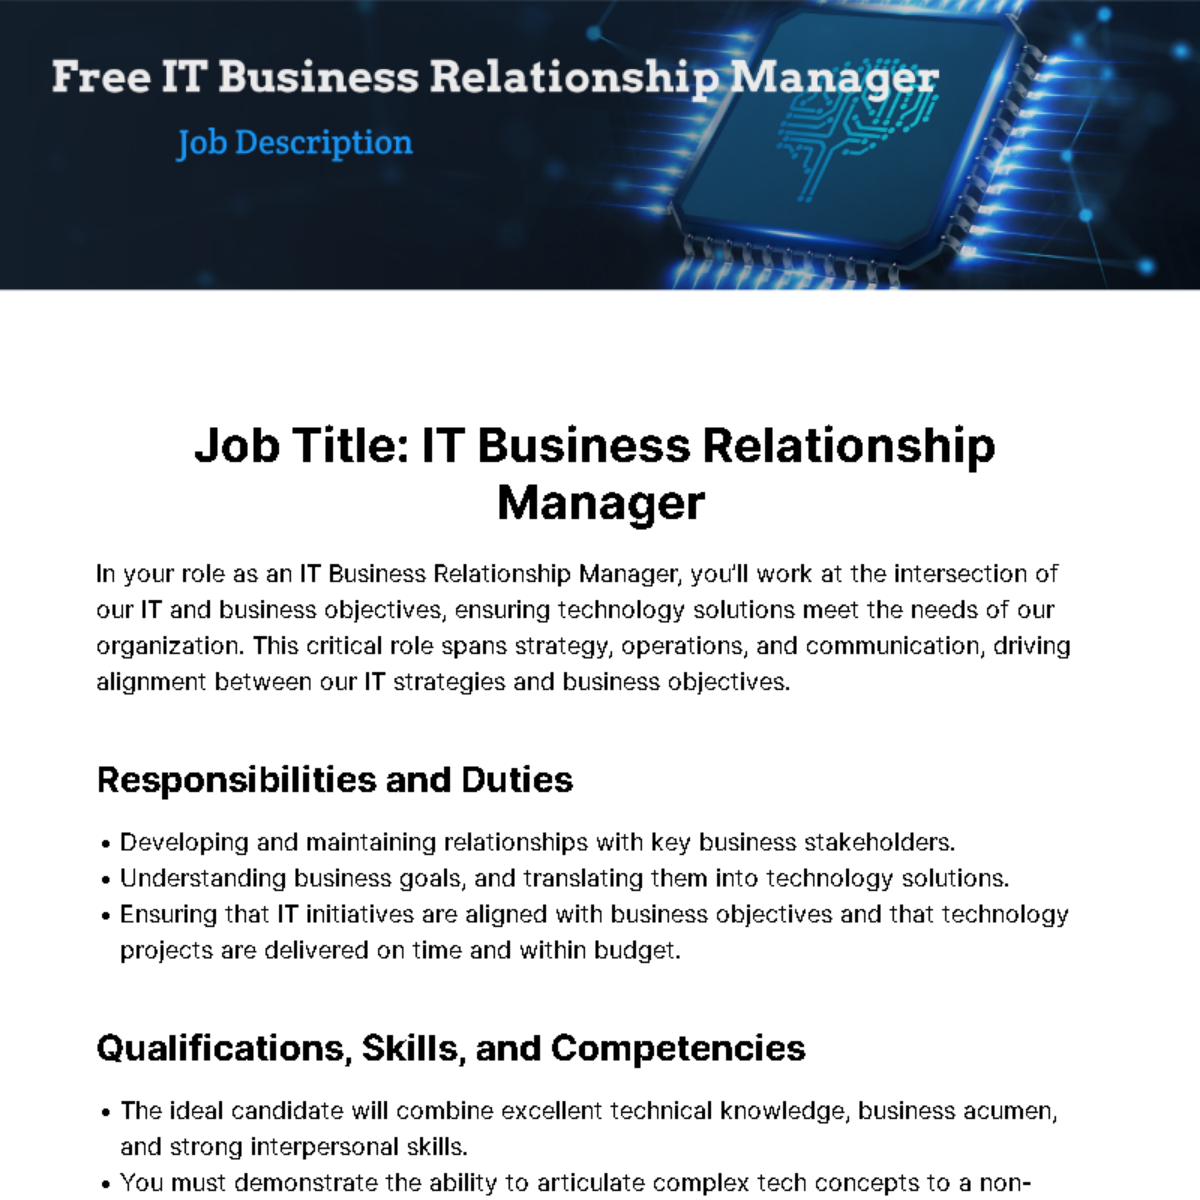 Free IT Business Relationship Manager Job Description Template